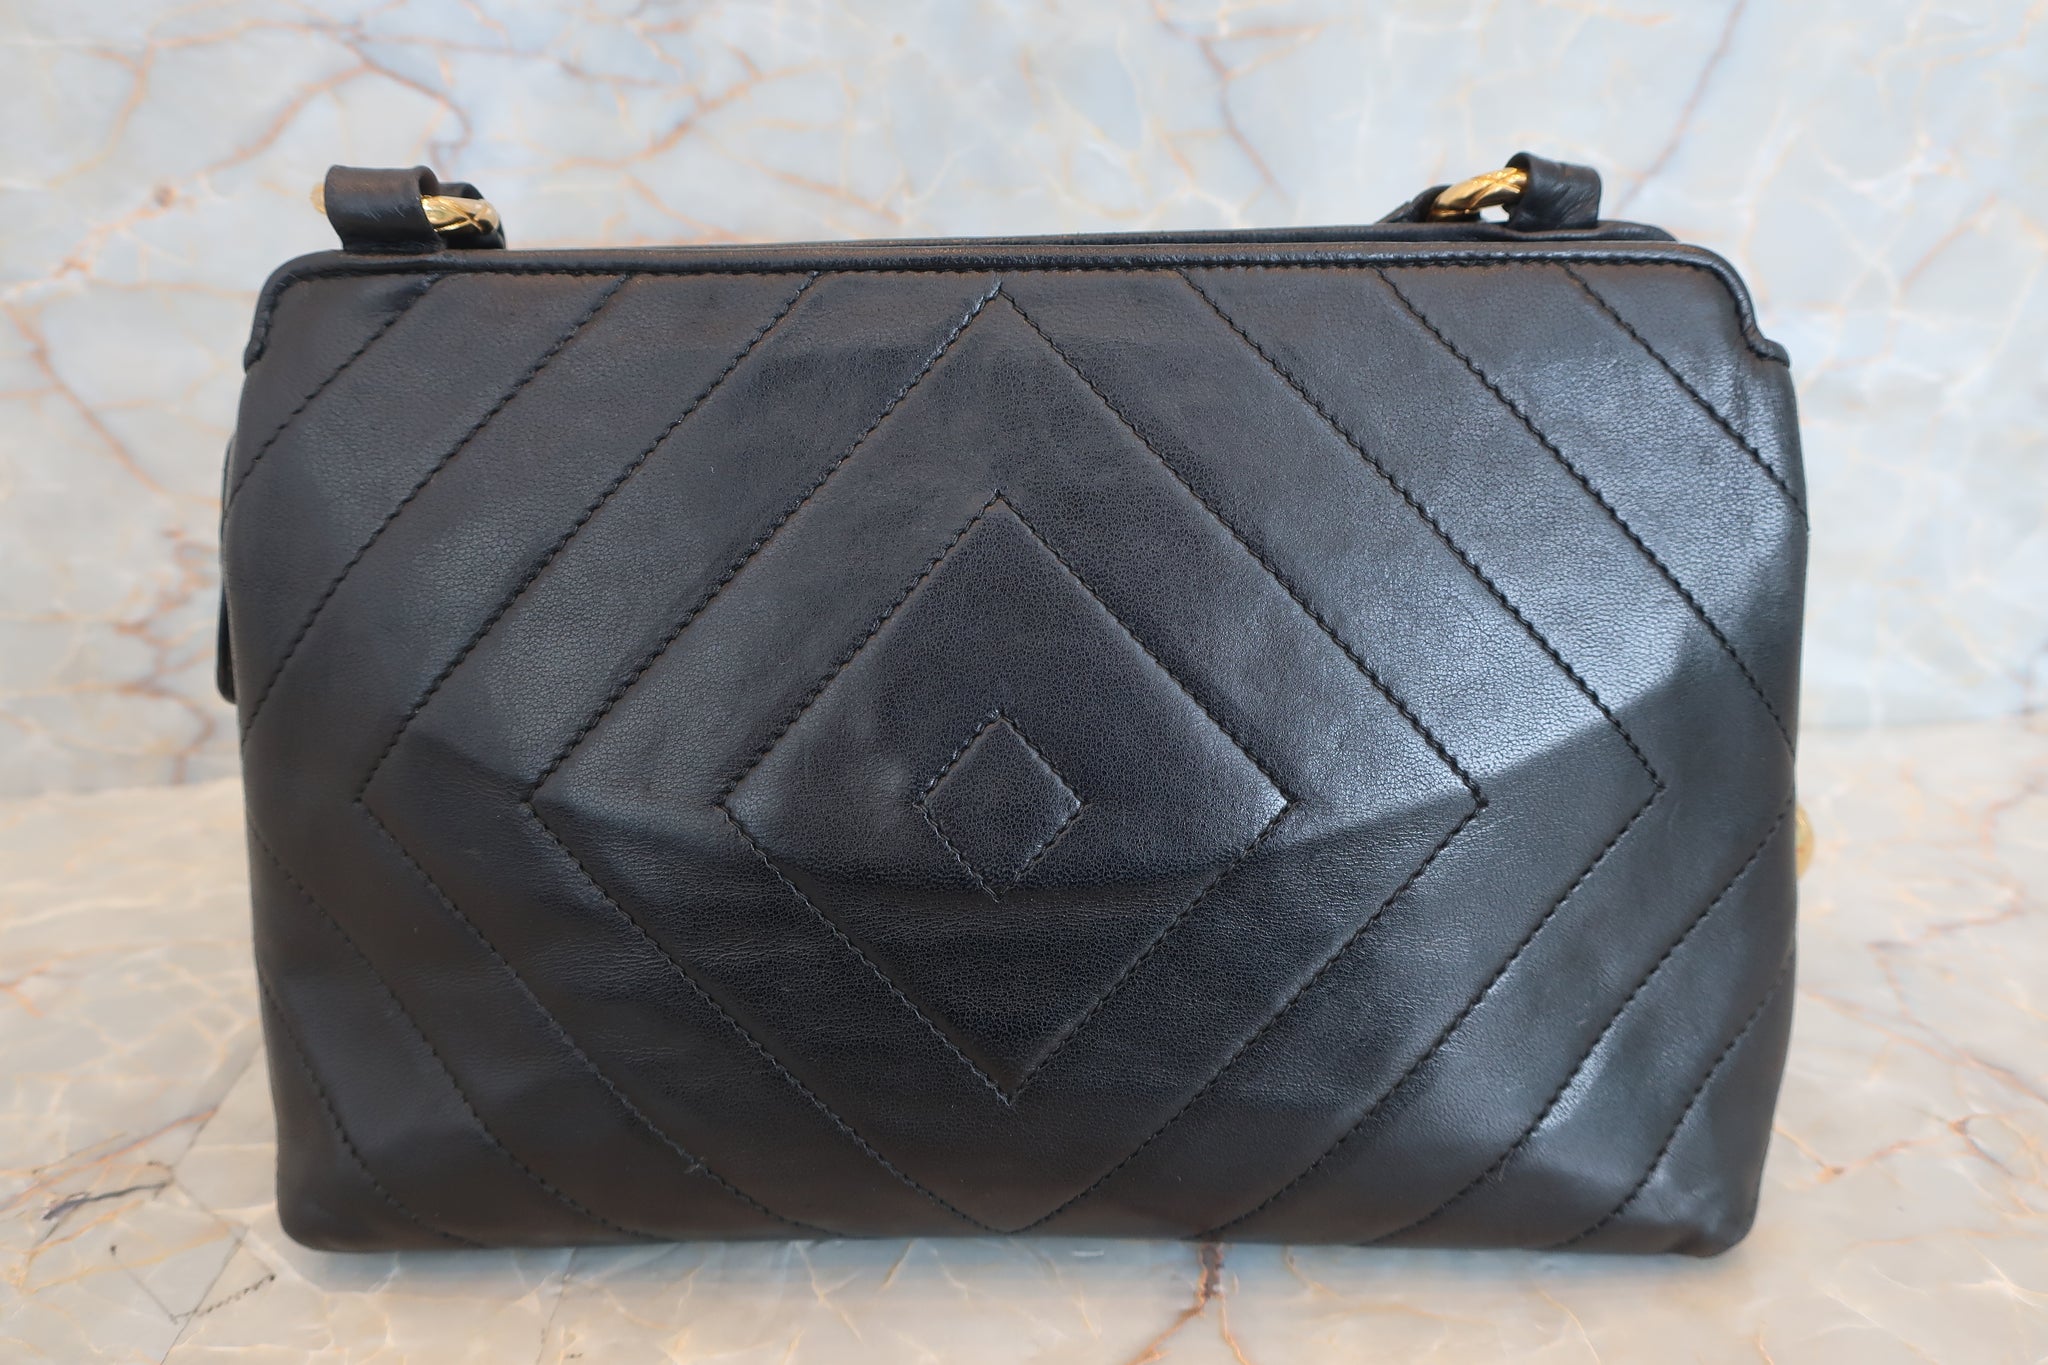 Chanel Black Lambskin Leather Mini Top Handle CC Chain Clutch Bag